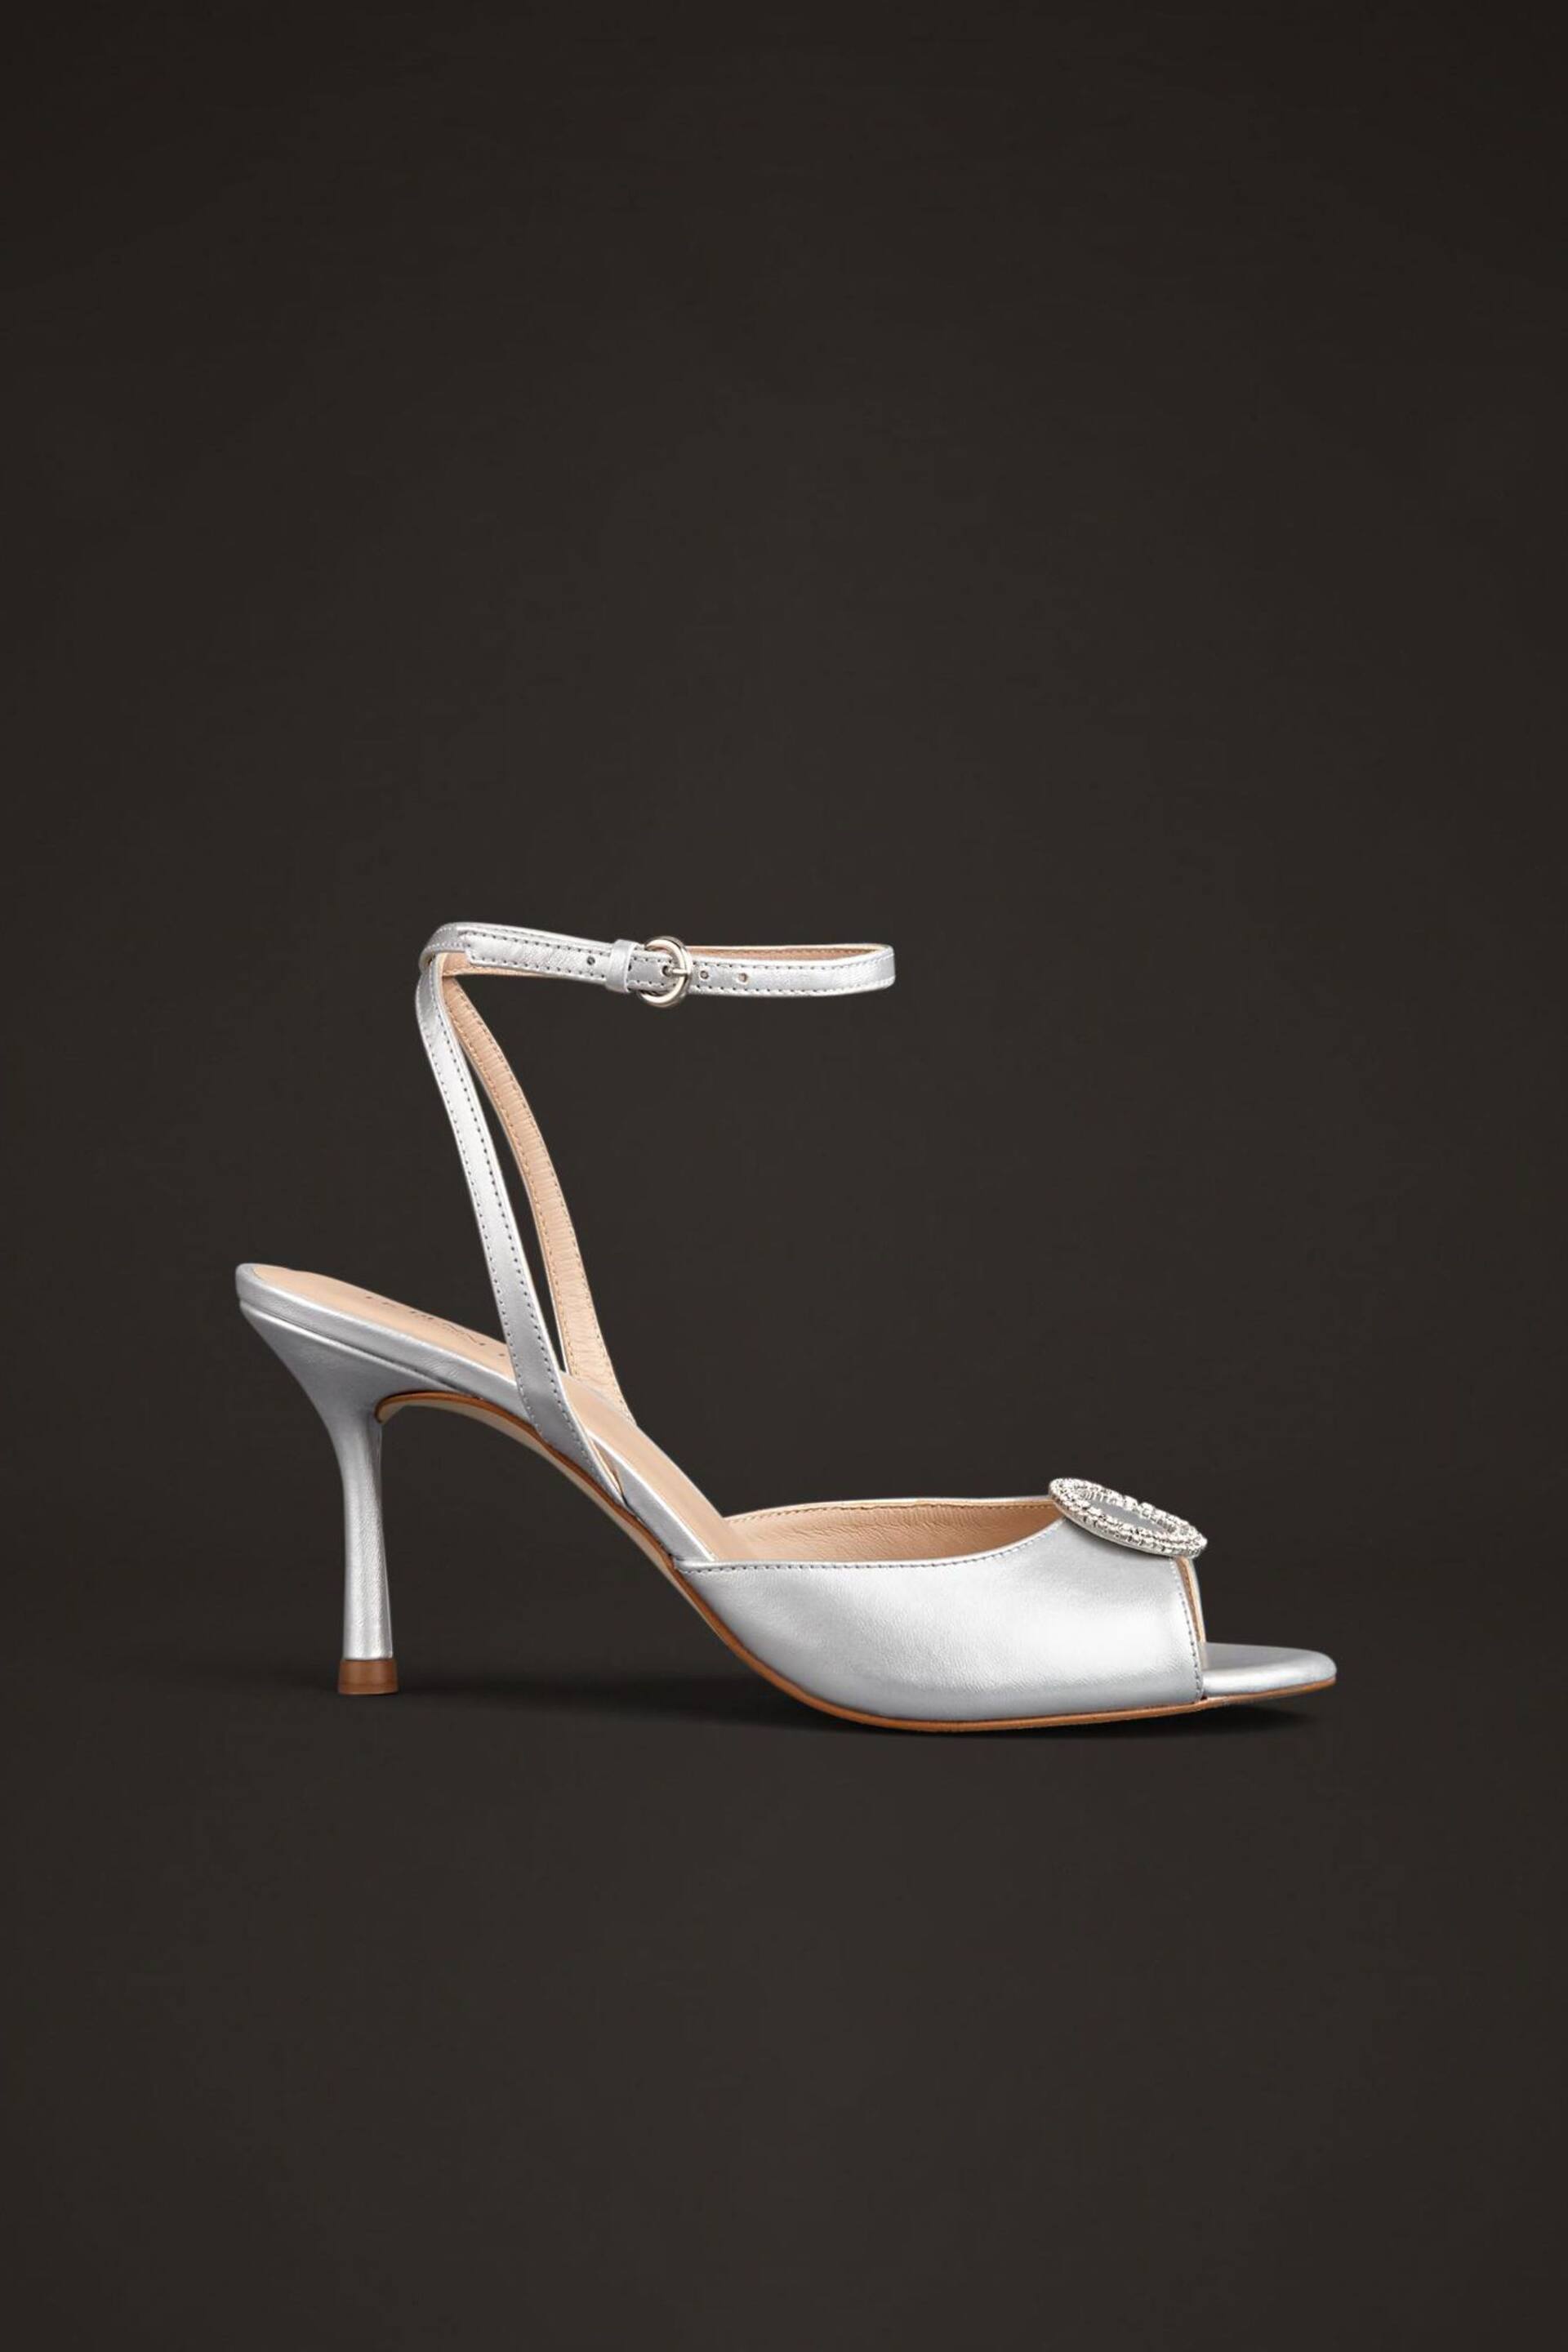 LK Bennett Belle Leather Wedding Shoes - Image 3 of 4